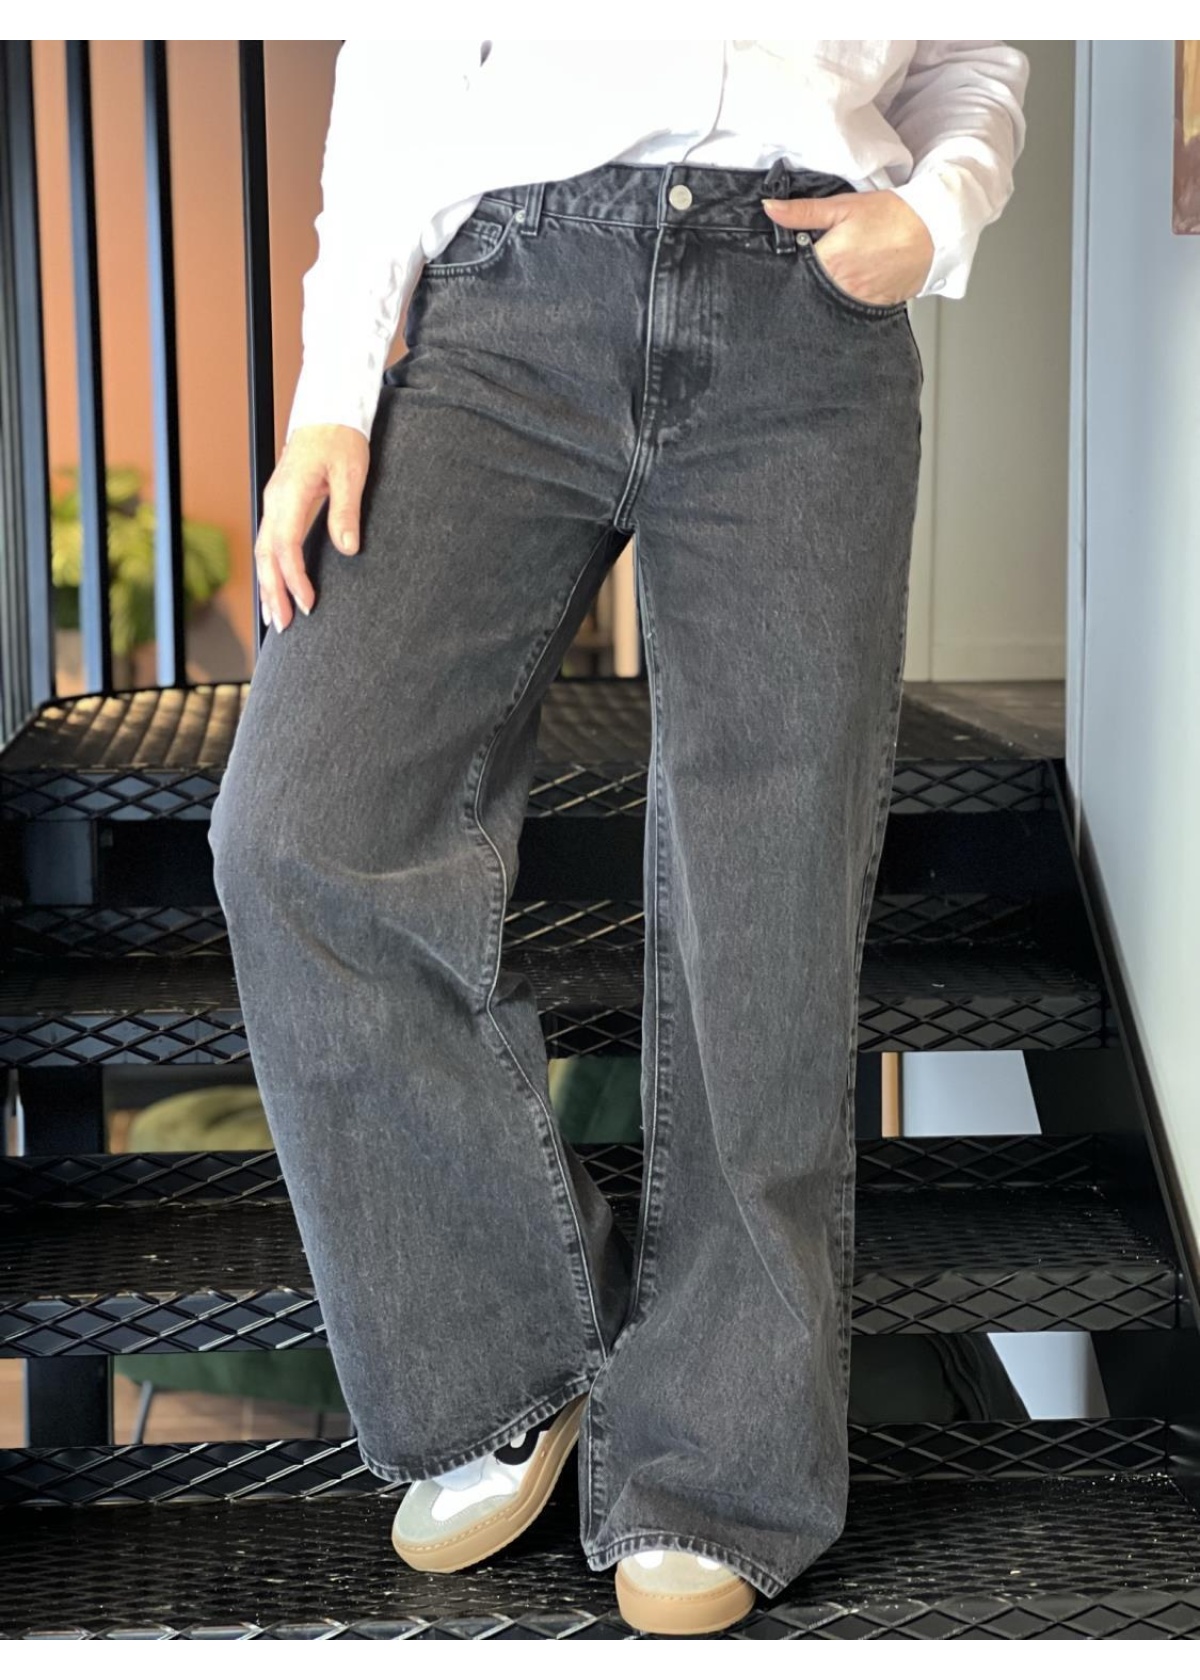 Camilla Pihl Denim taylor jeans grey